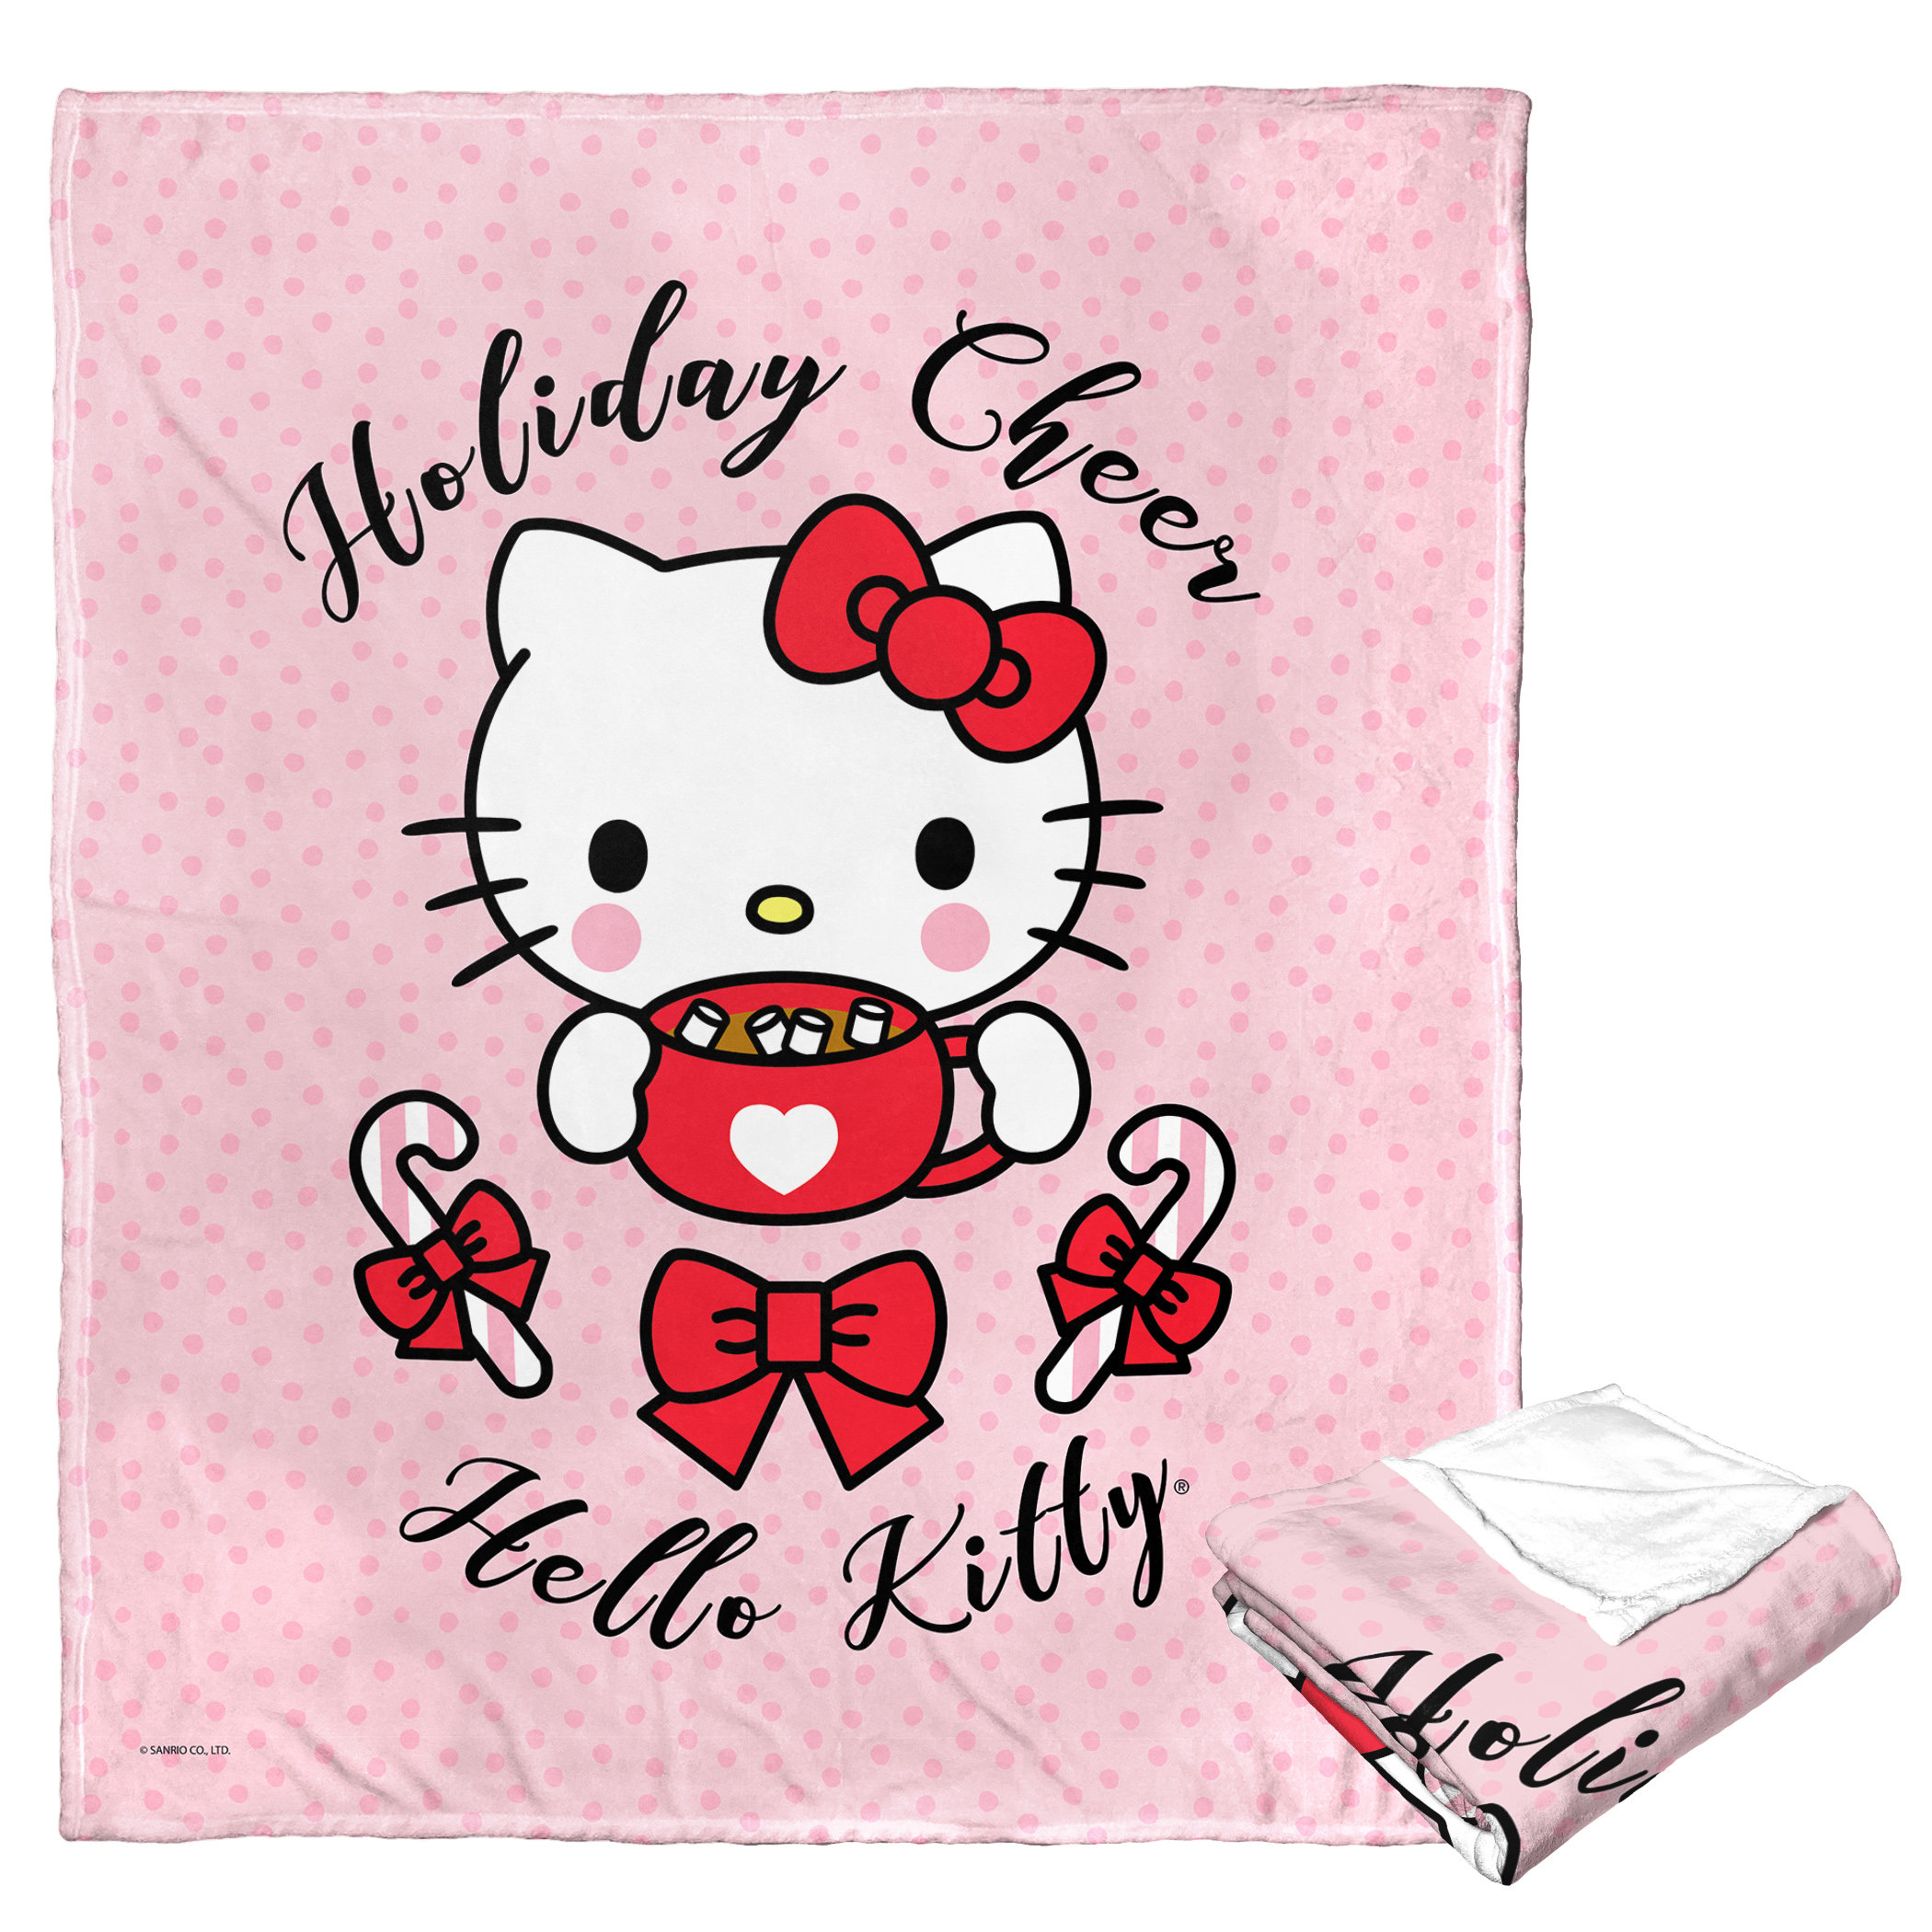  Northwest Hello Kitty Woven Tapestry Throw Blanket, 48